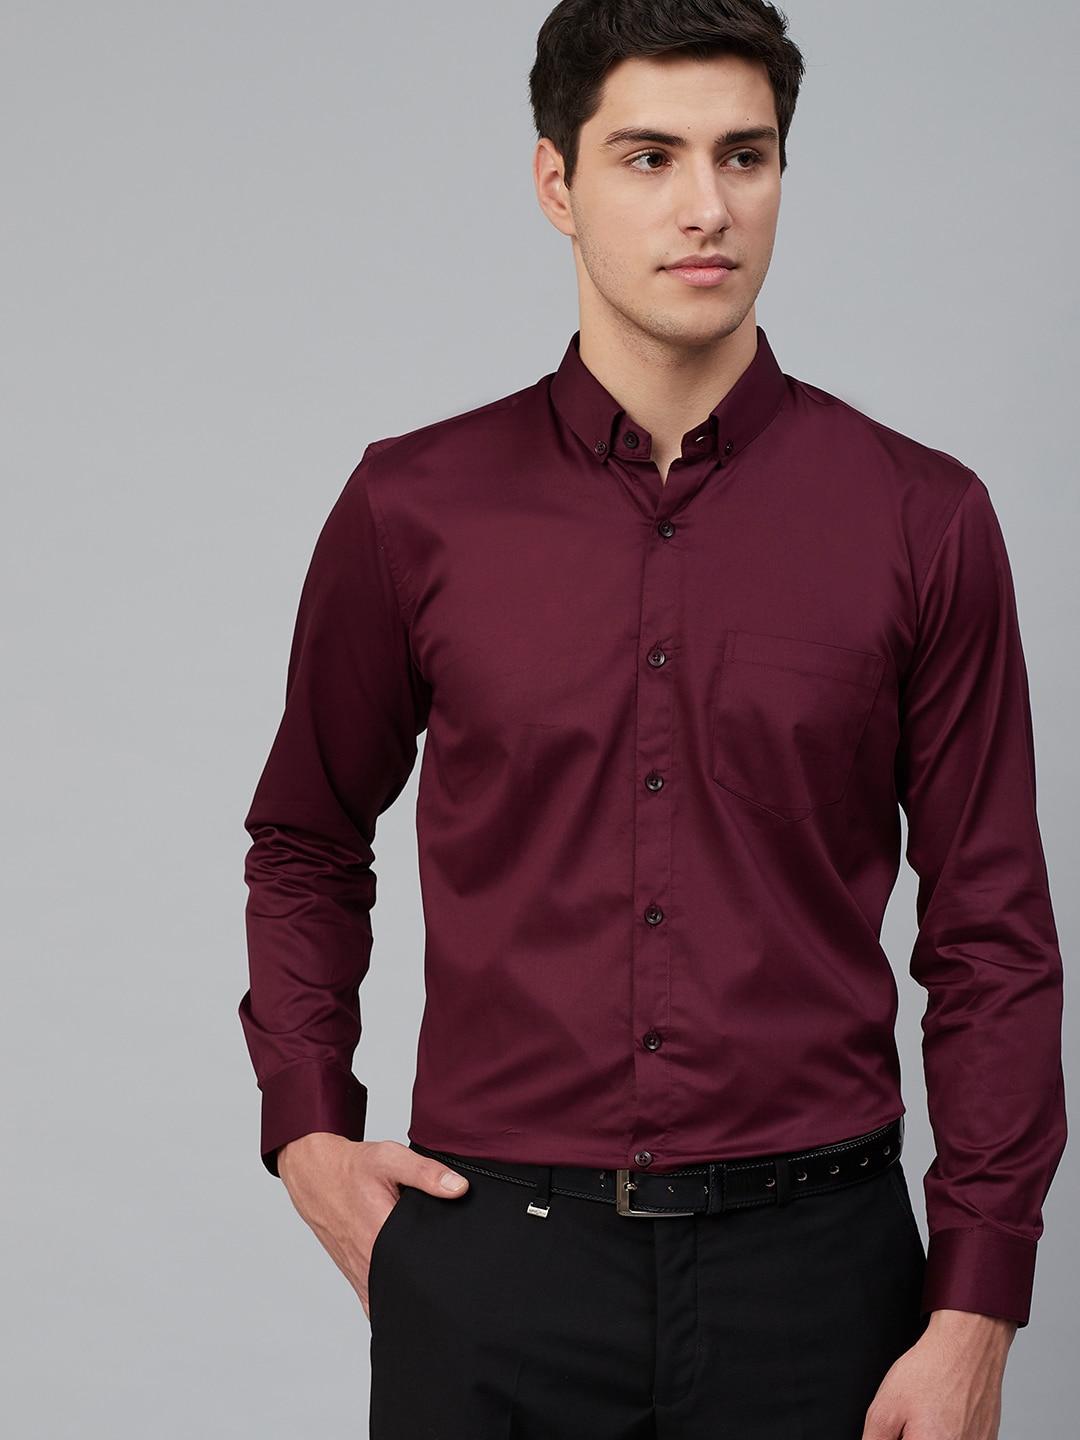 dennison men burgundy twill comfort regular fit solid formal shirt